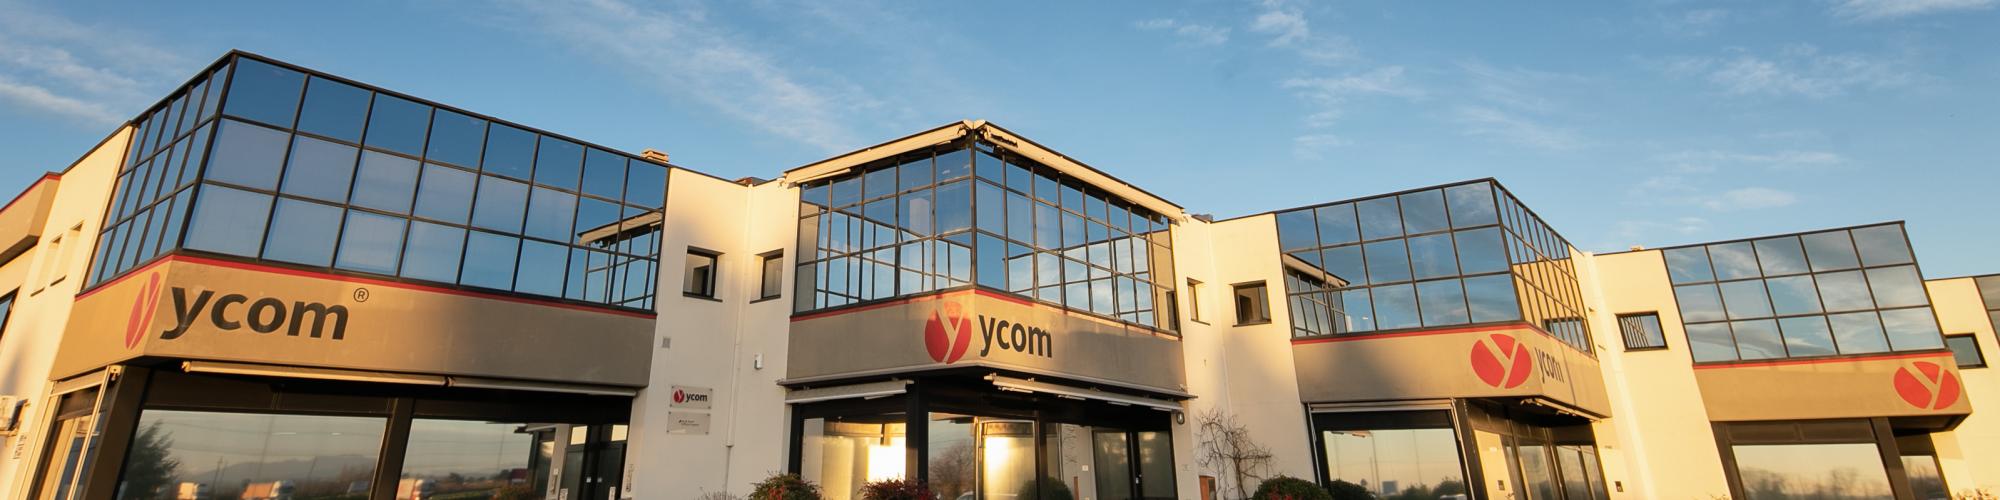 YCOM cover image